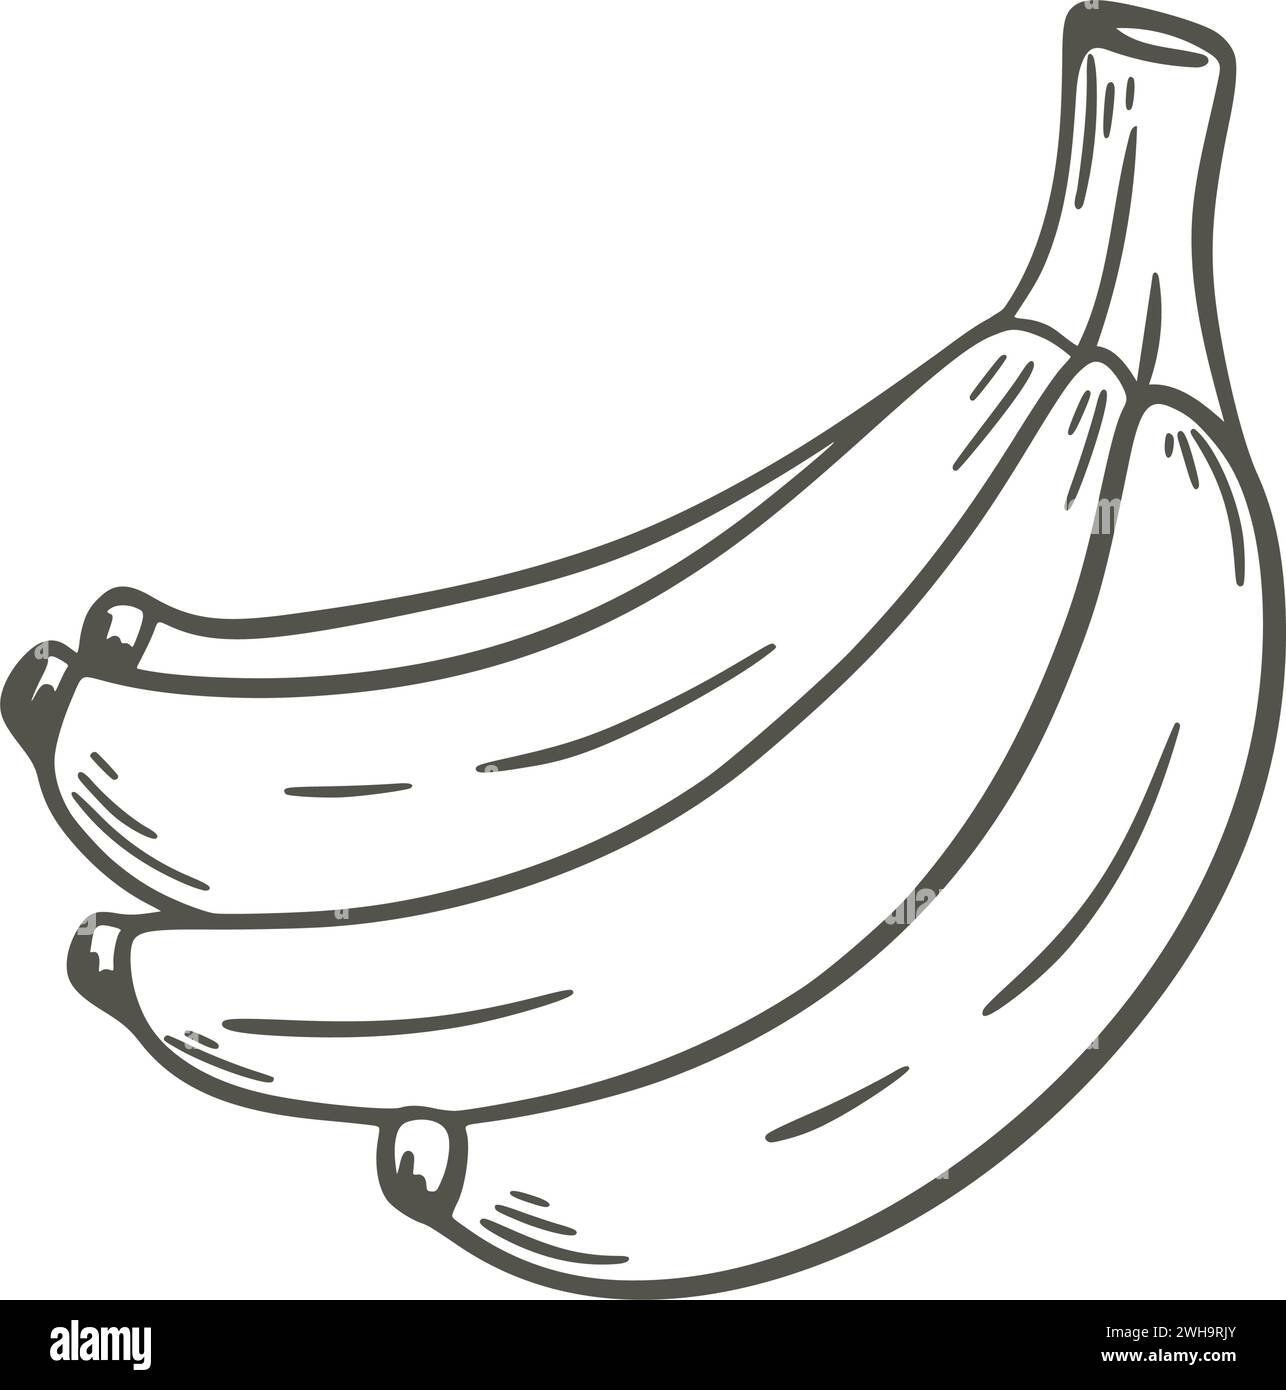 Ein Haufen Bananen-Tusche-Kritzelskizze. Reife saftige Bananen Vintage Handgravur, isolierte Vektor-Illustration. Gesunde Bio-Lebensmittel-Ikone, exotische Tropica Stock Vektor